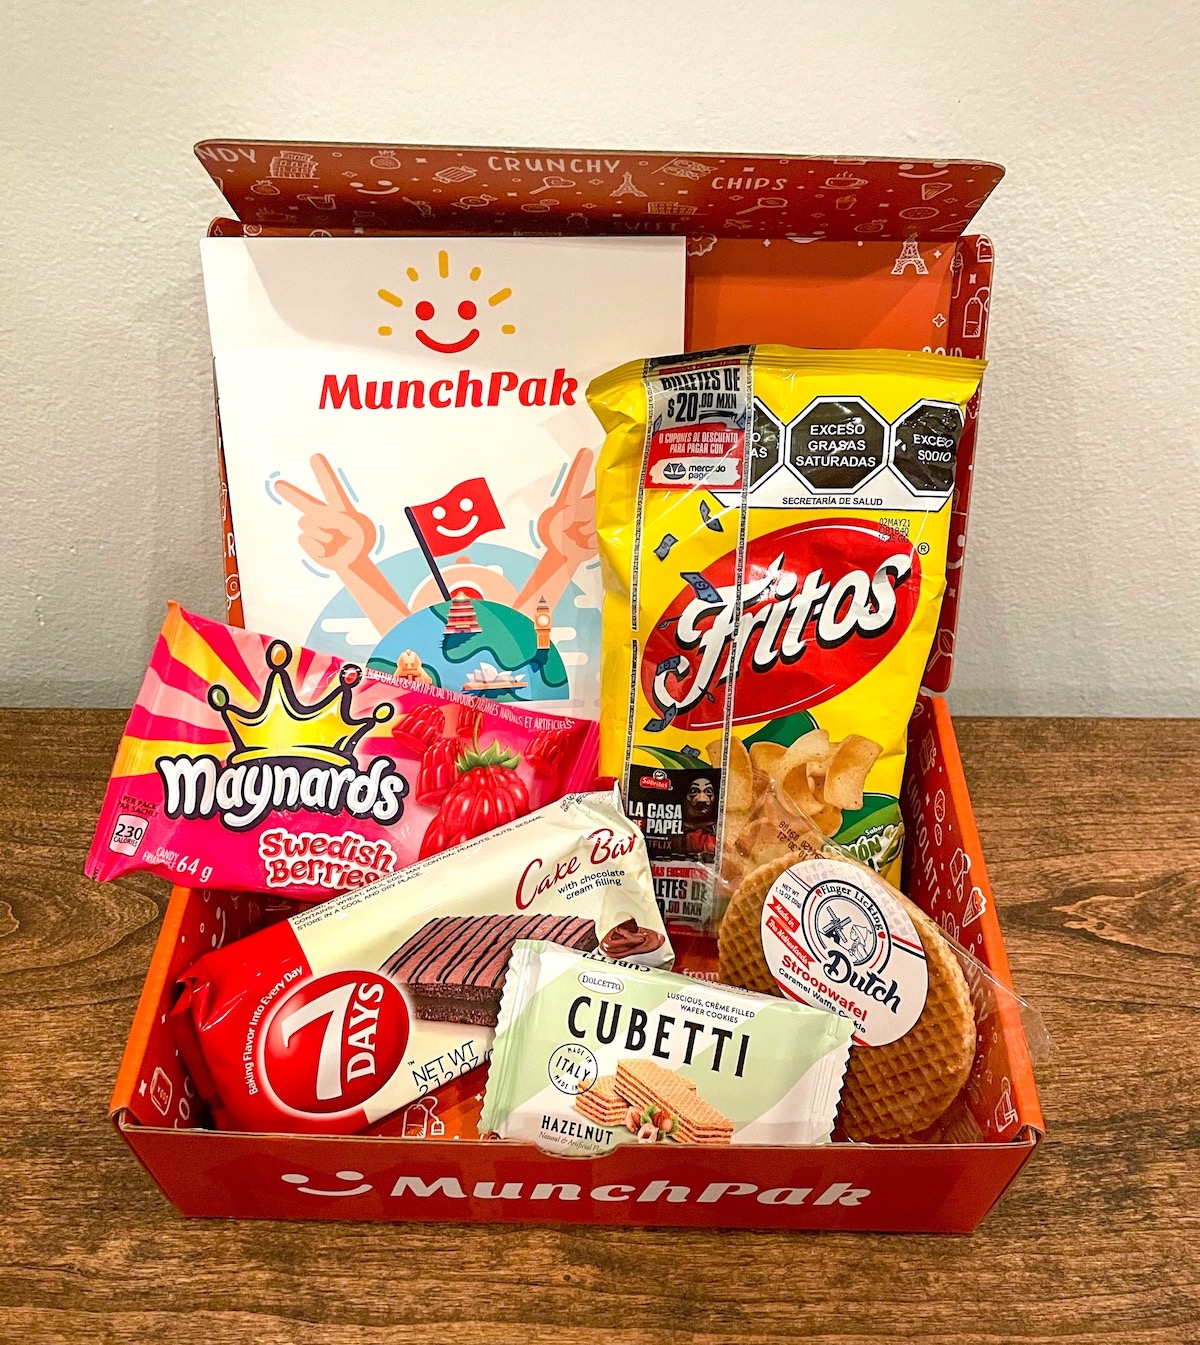 MunchPak Mini Box from February 2021 open showing the snacks